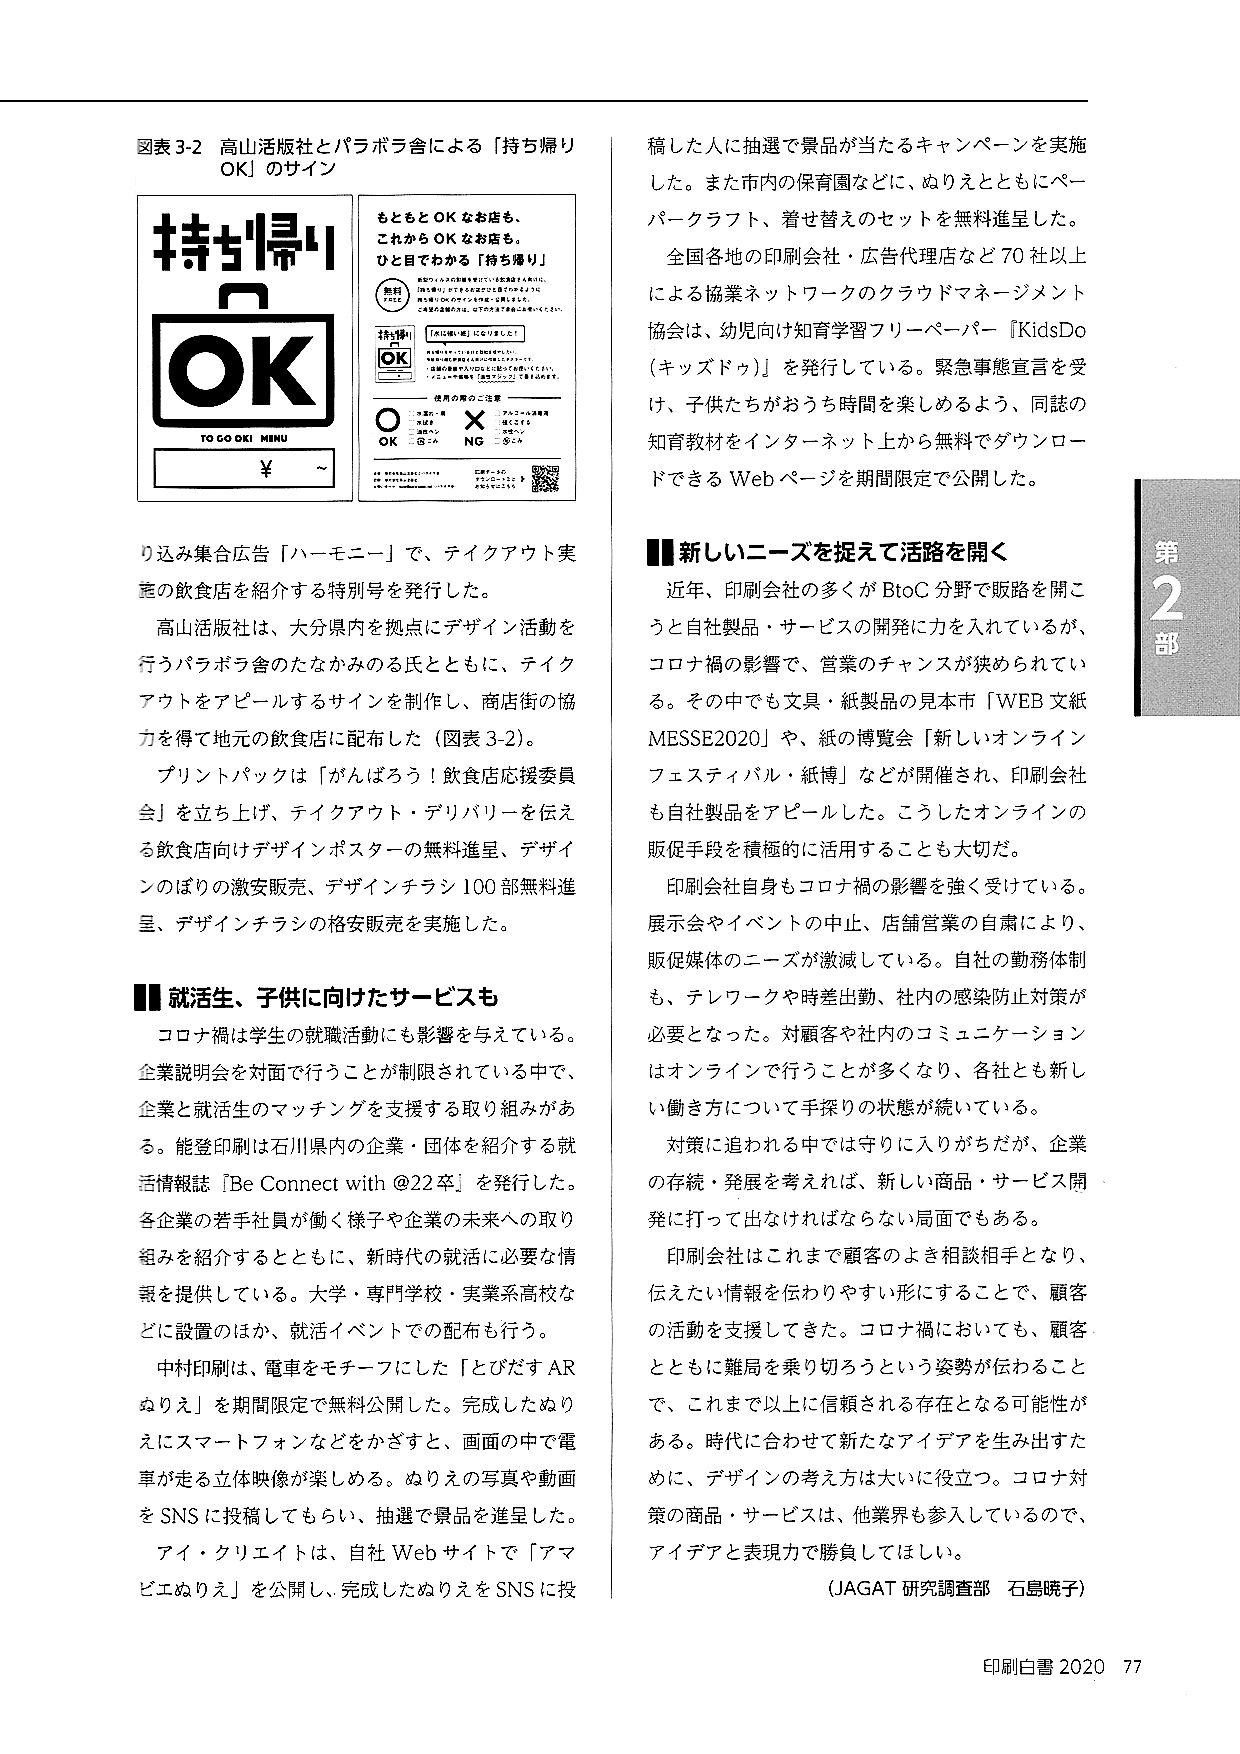 JAGAT(公益社団法人日本印刷技術協会)の『印刷白書2020』に掲載していただきました